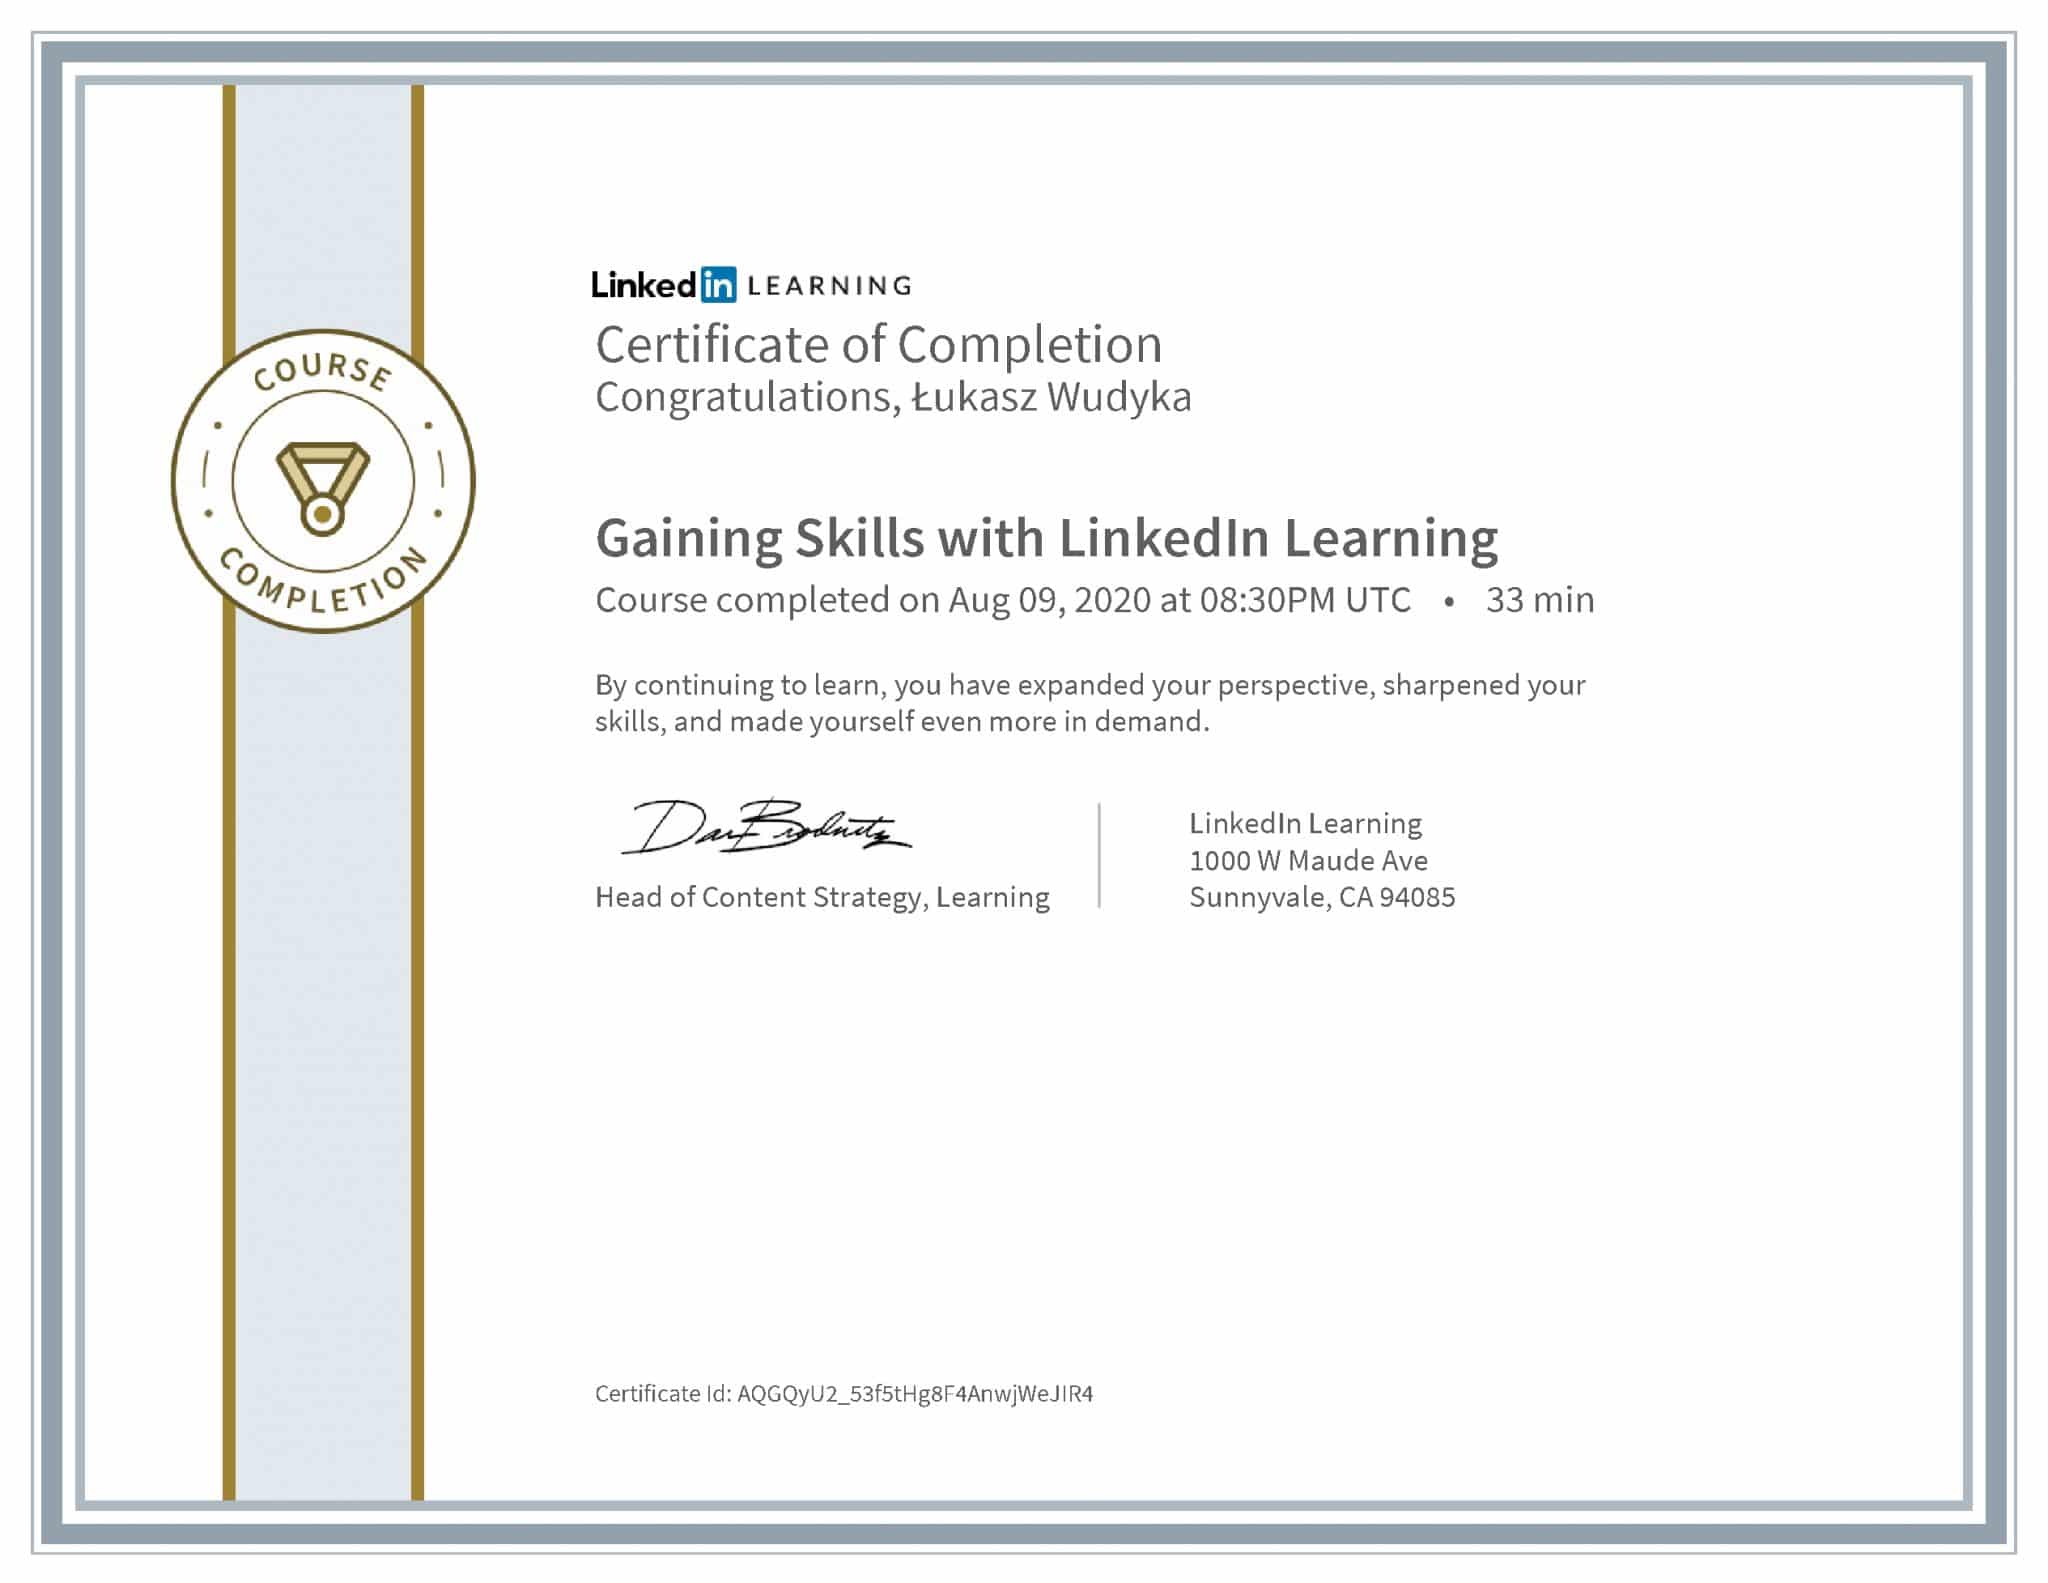 Łukasz Wudyka certyfikat LinkedIn Gaining Skills with LinkedIn Learning